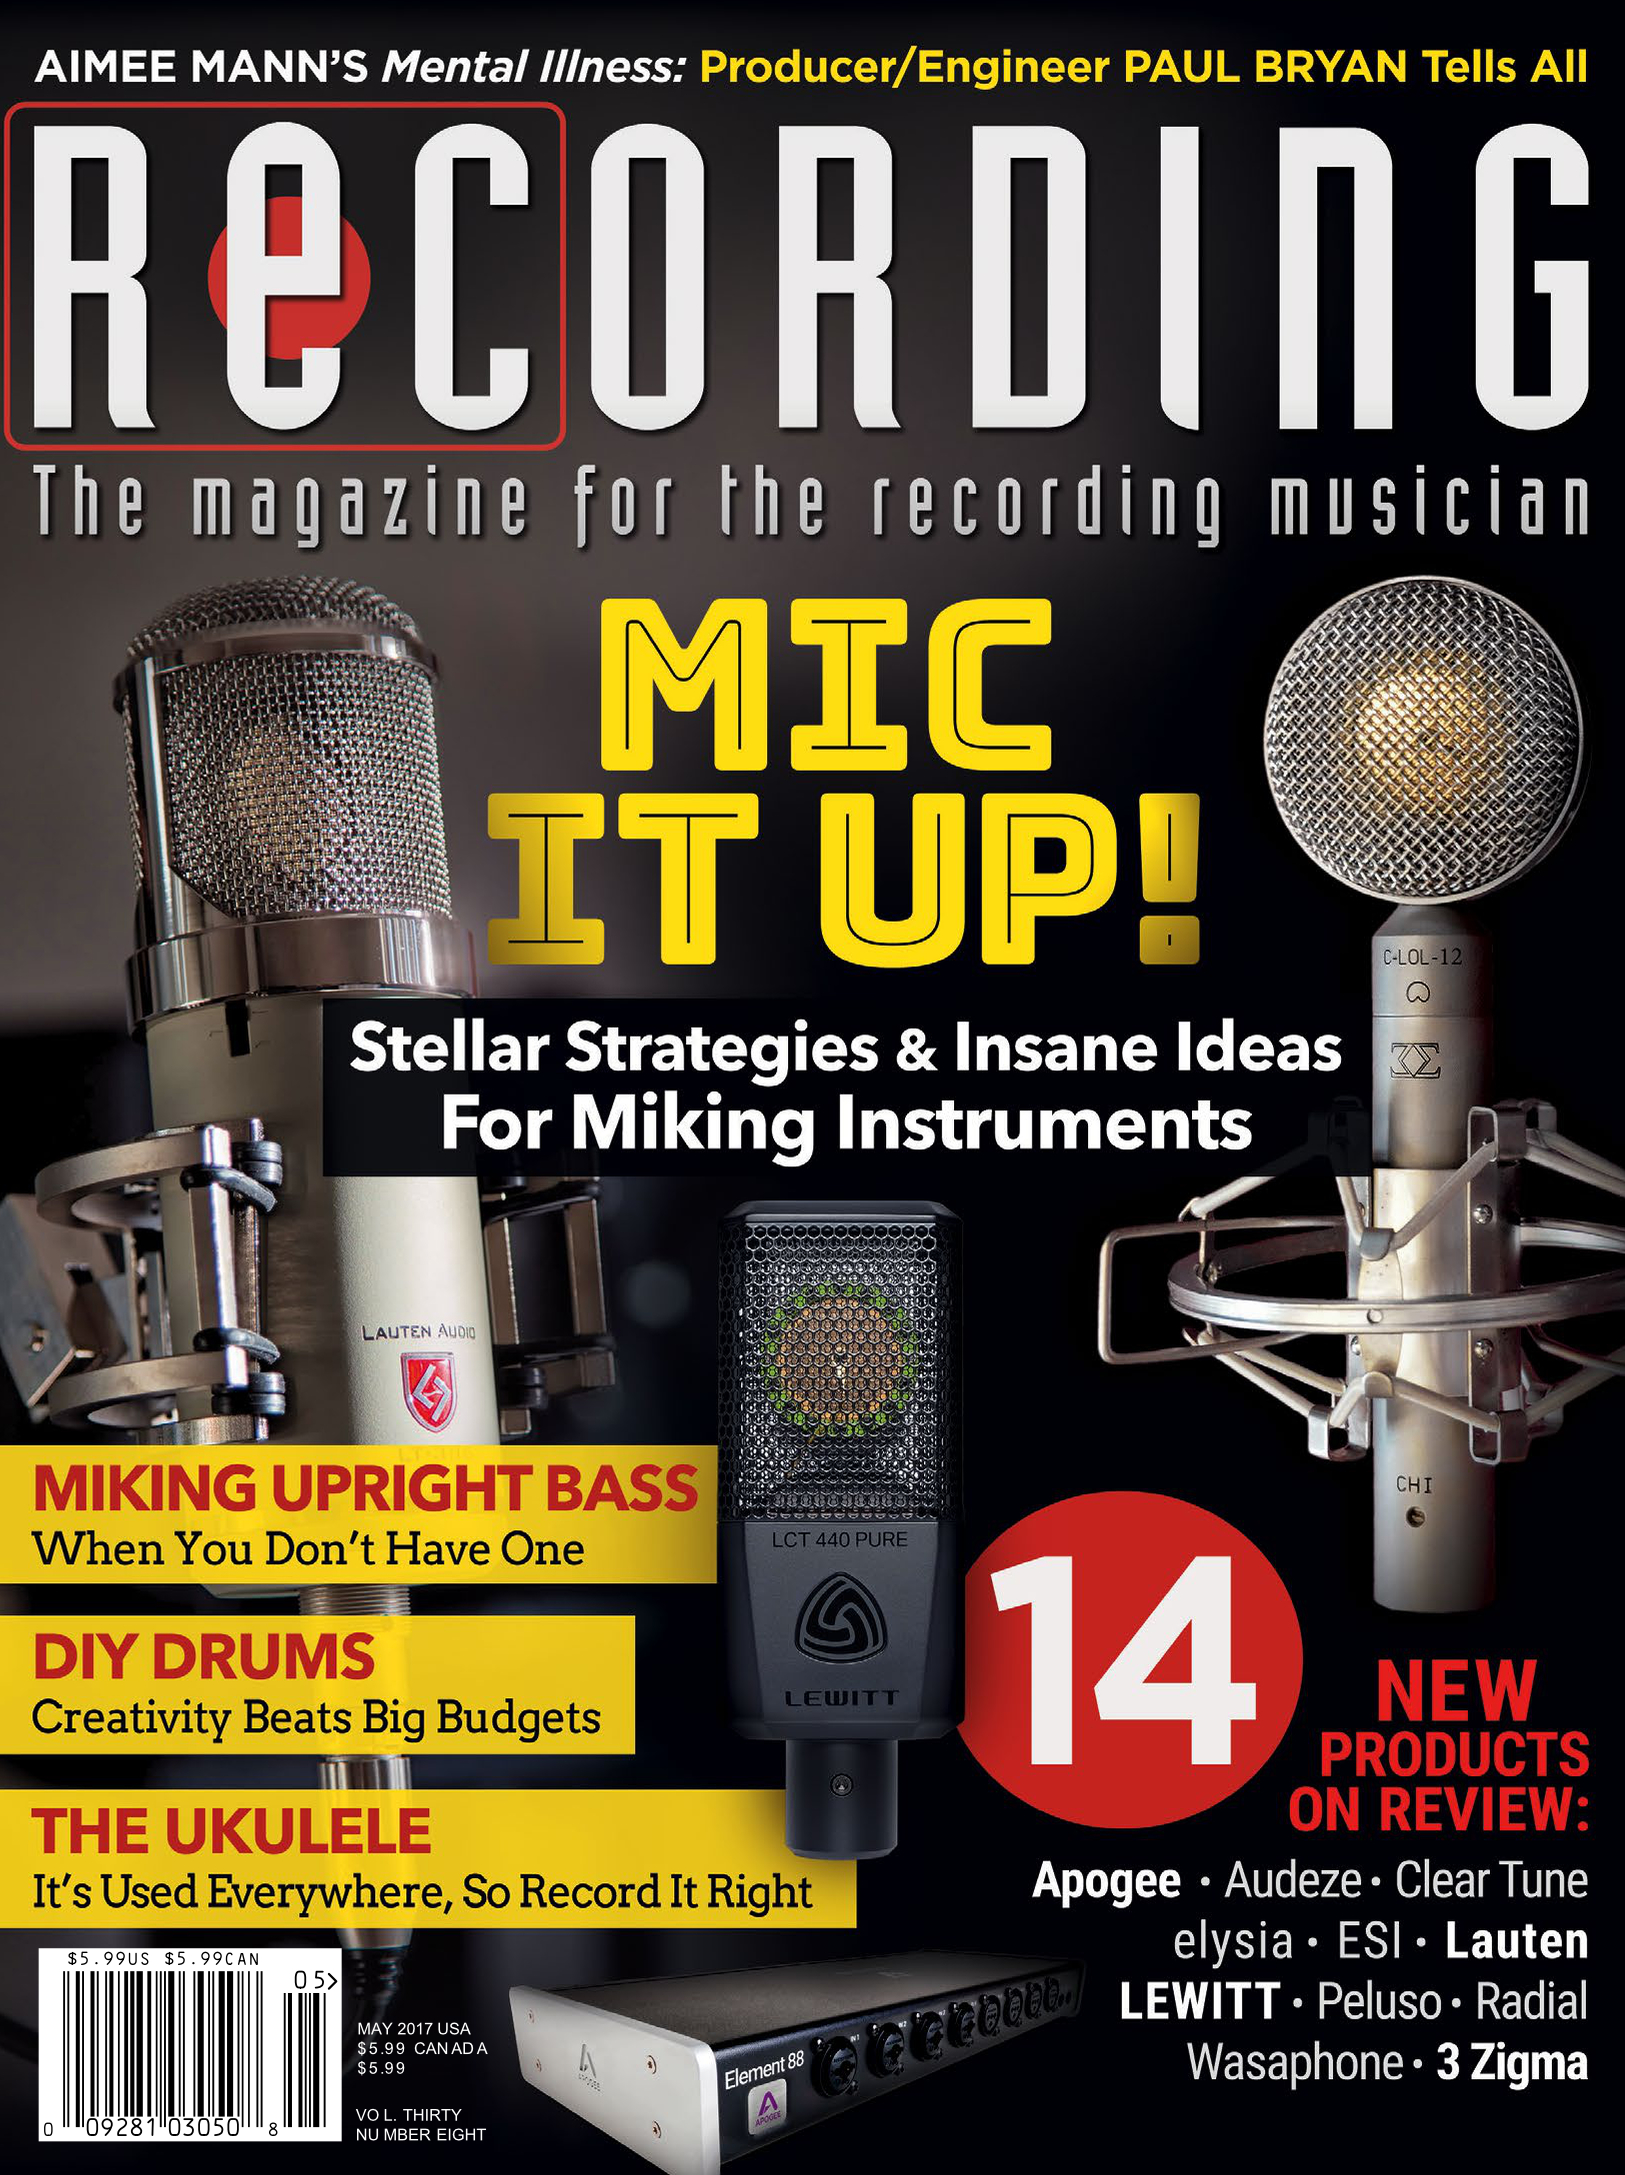 Lauten Audio Eden LT-386 Microphone review by Recording Magazine